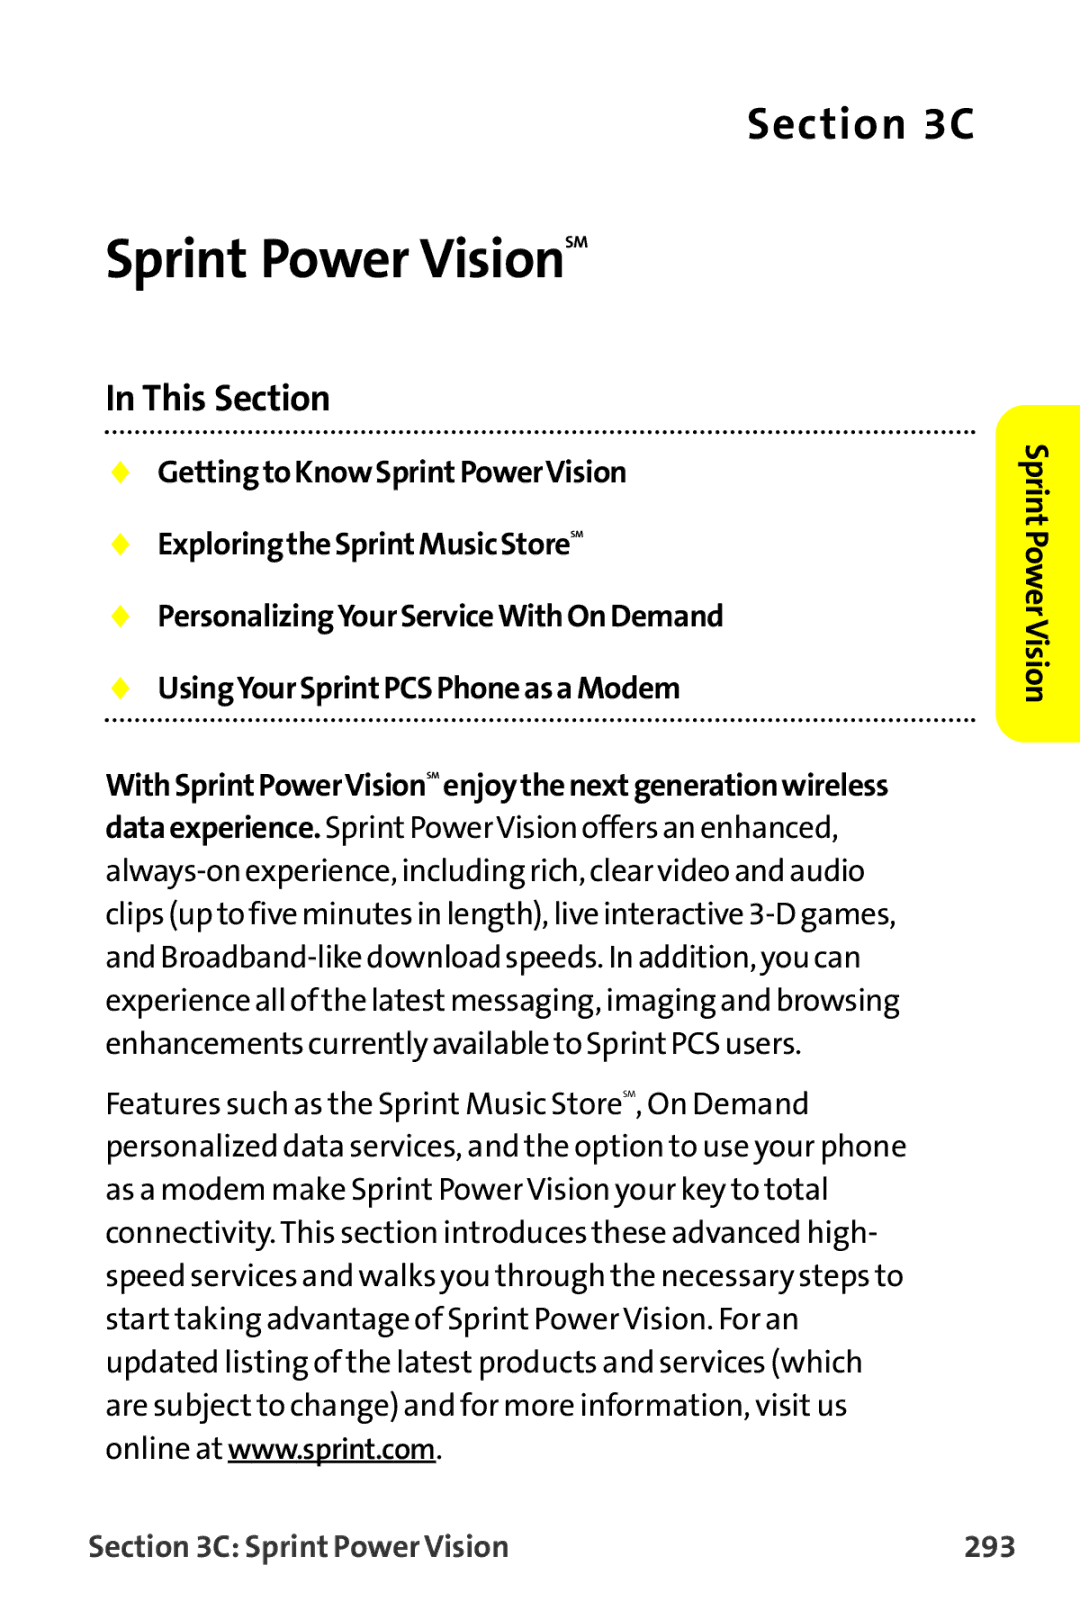 Sprint Nextel MM-7500 manual Sprint Power VisionSM, Sprint Power Vision 293 